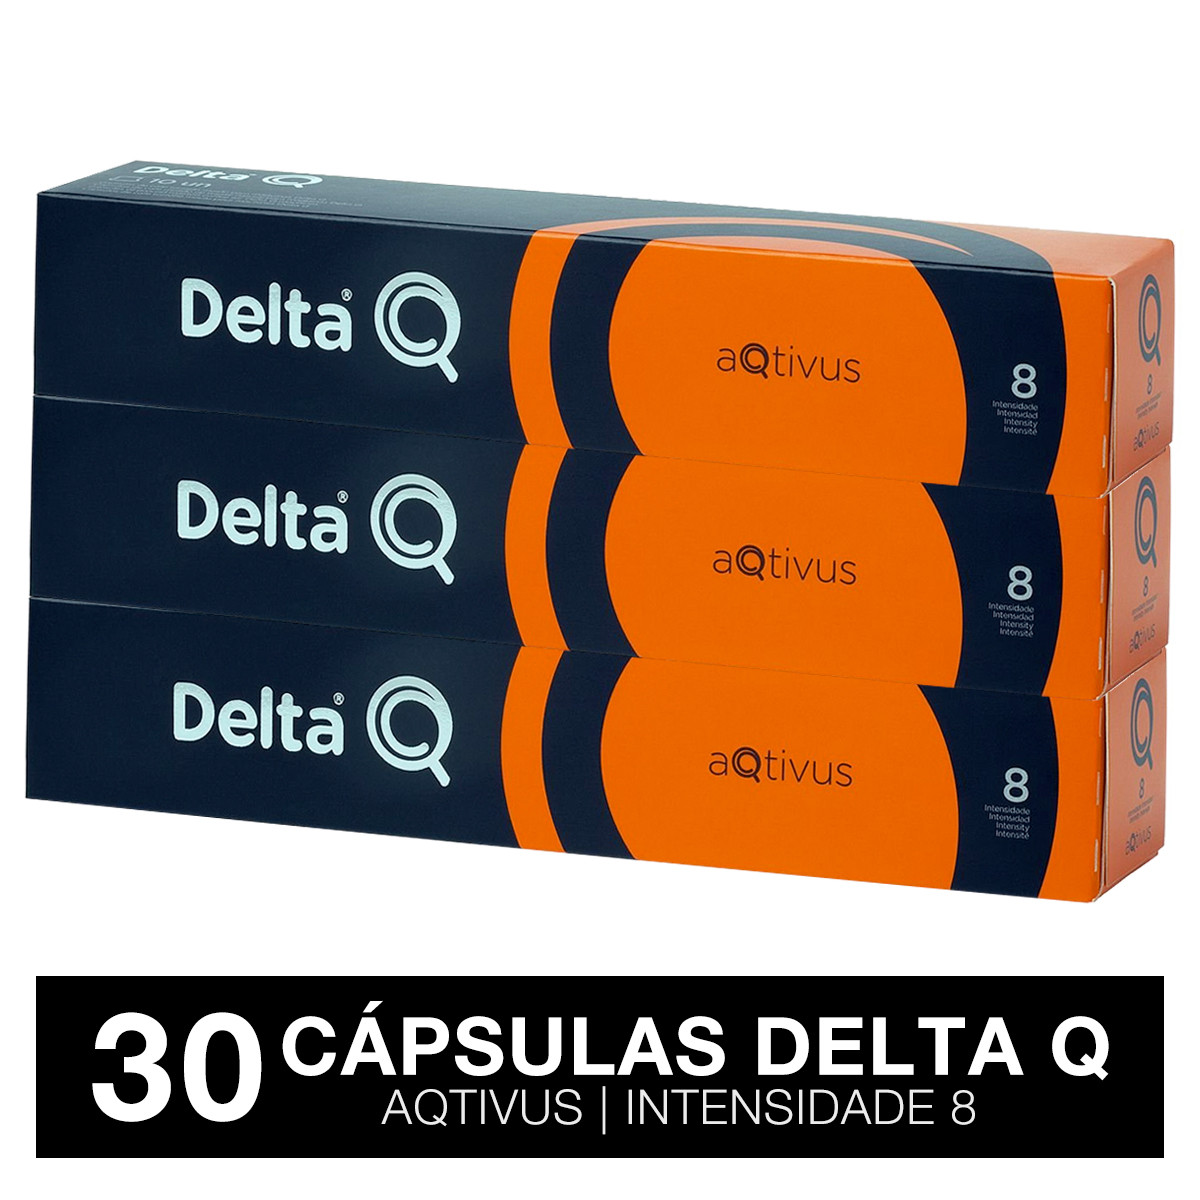 Qharisma, 10 cápsulas Delta Q. Intensidad 12.